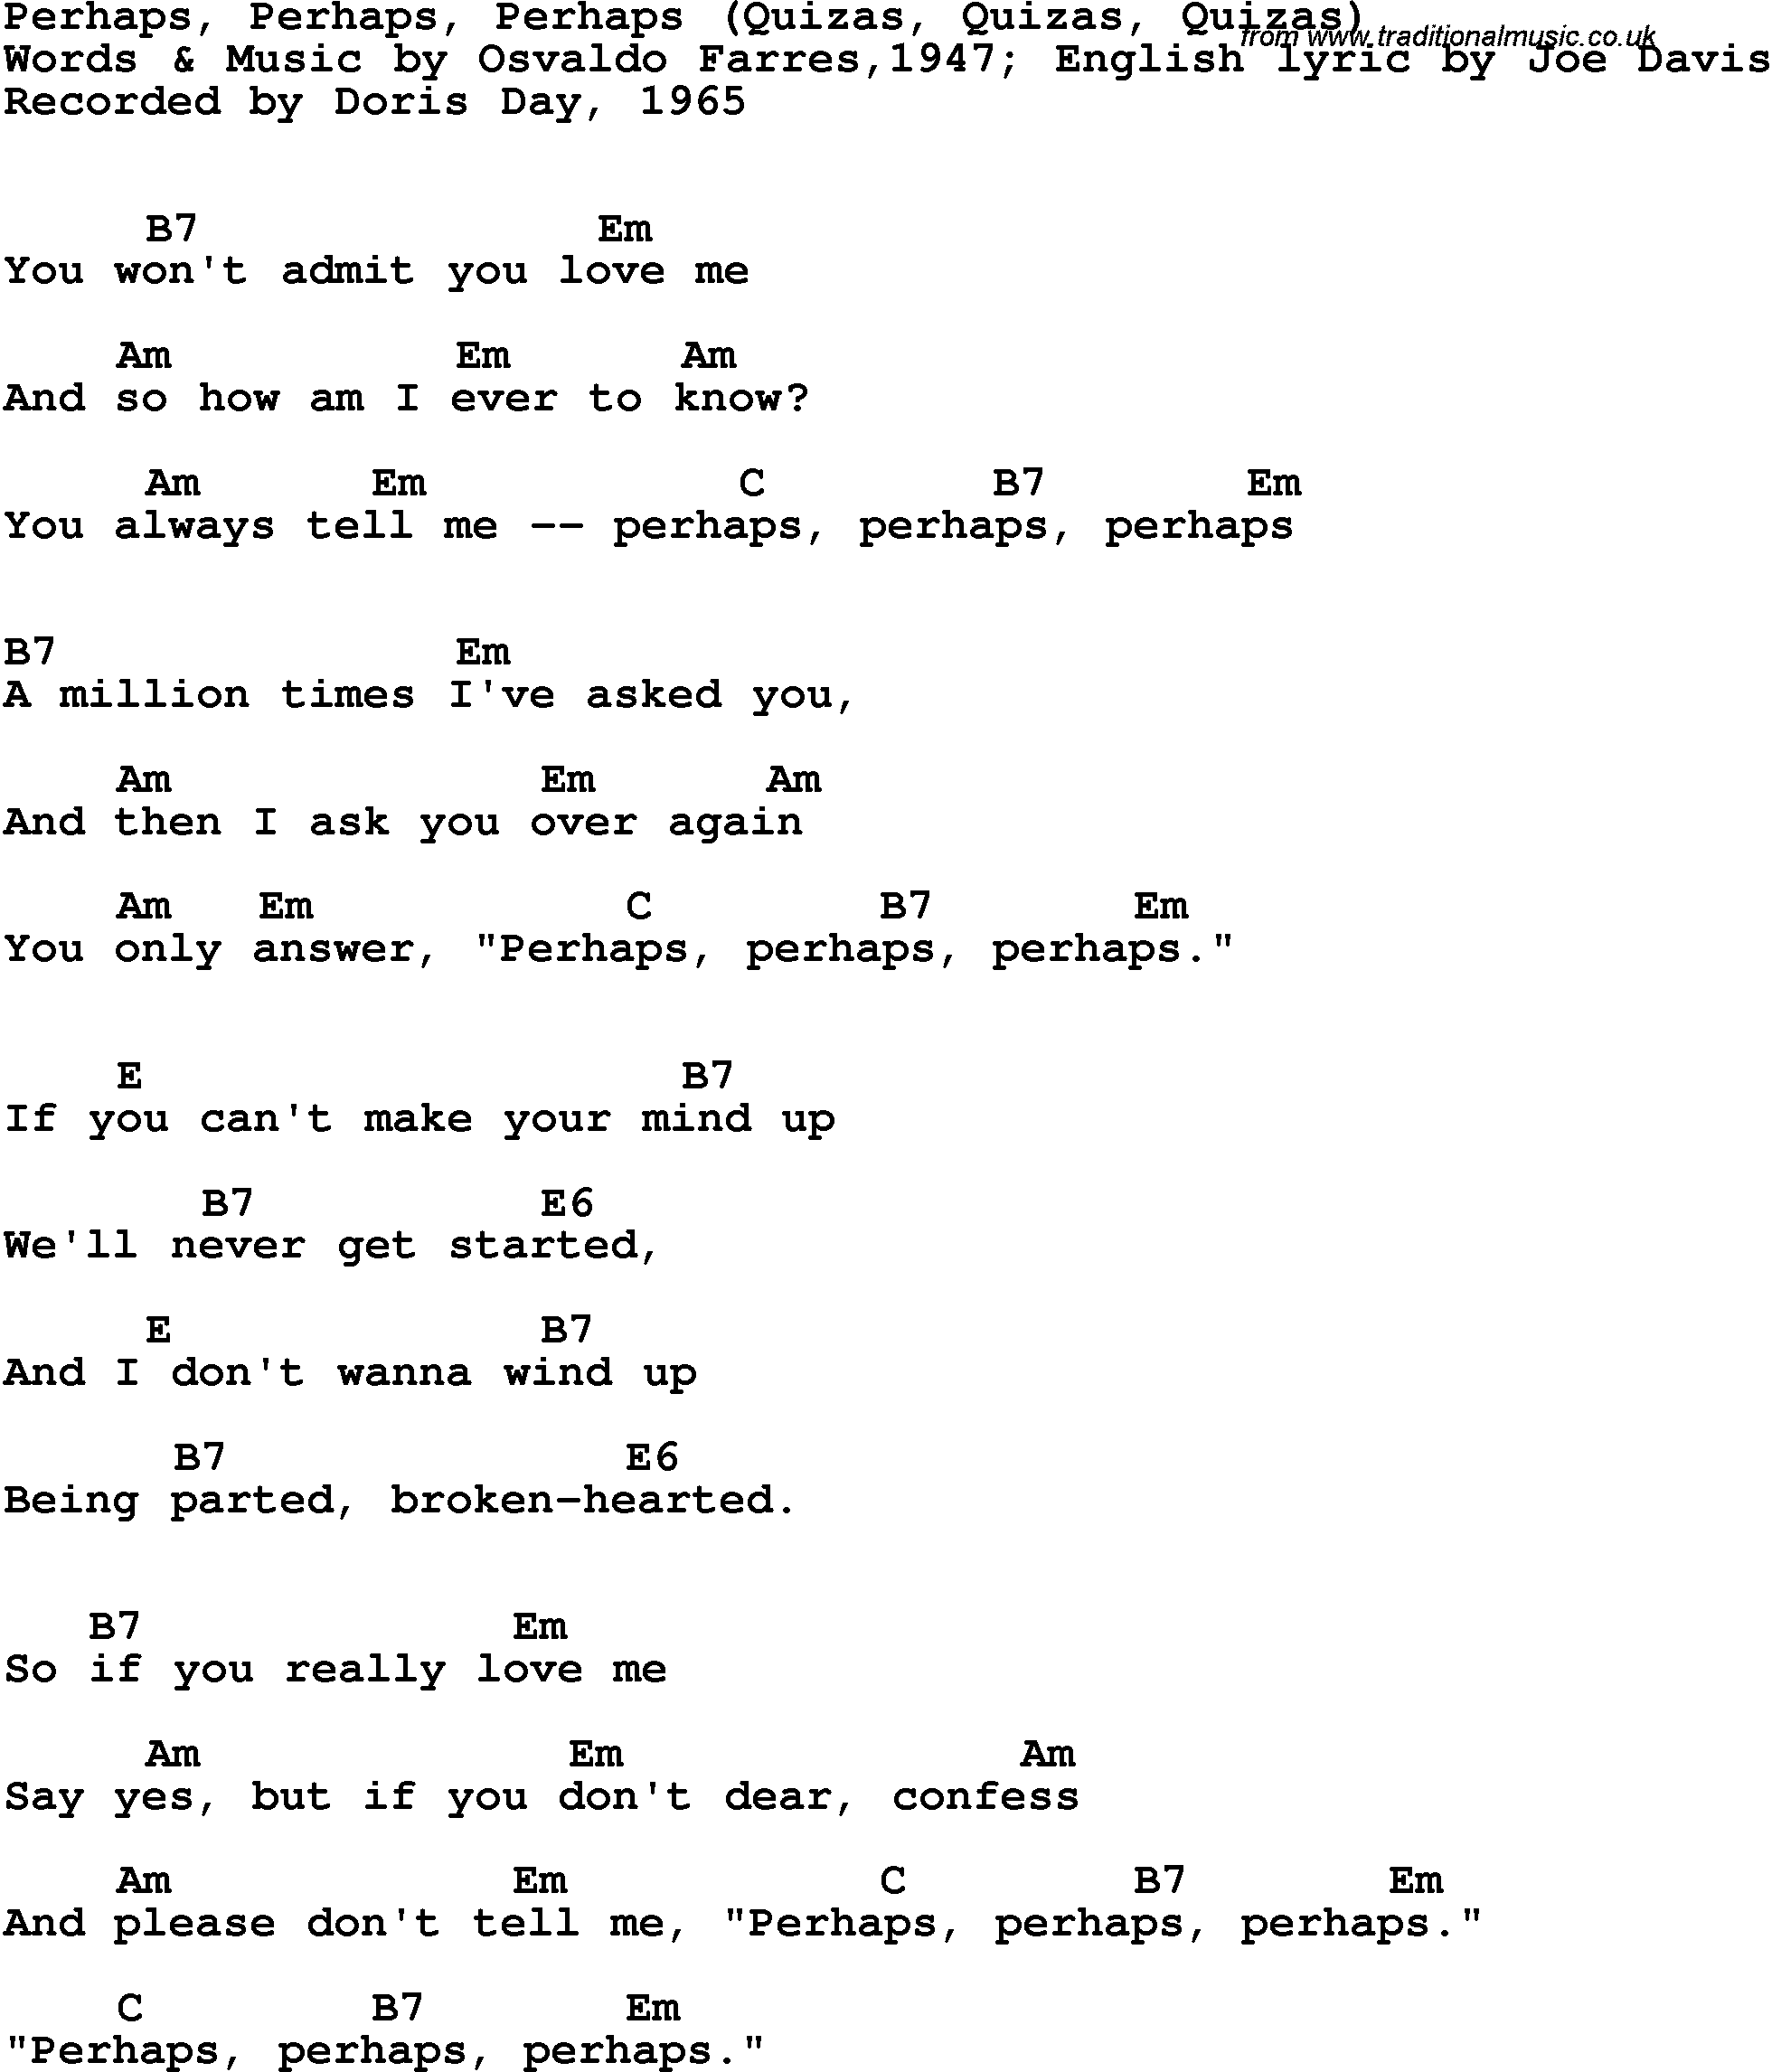 Song Lyrics with guitar chords for Perhaps, Perhaps, Perhaps - Doris Day, 1965